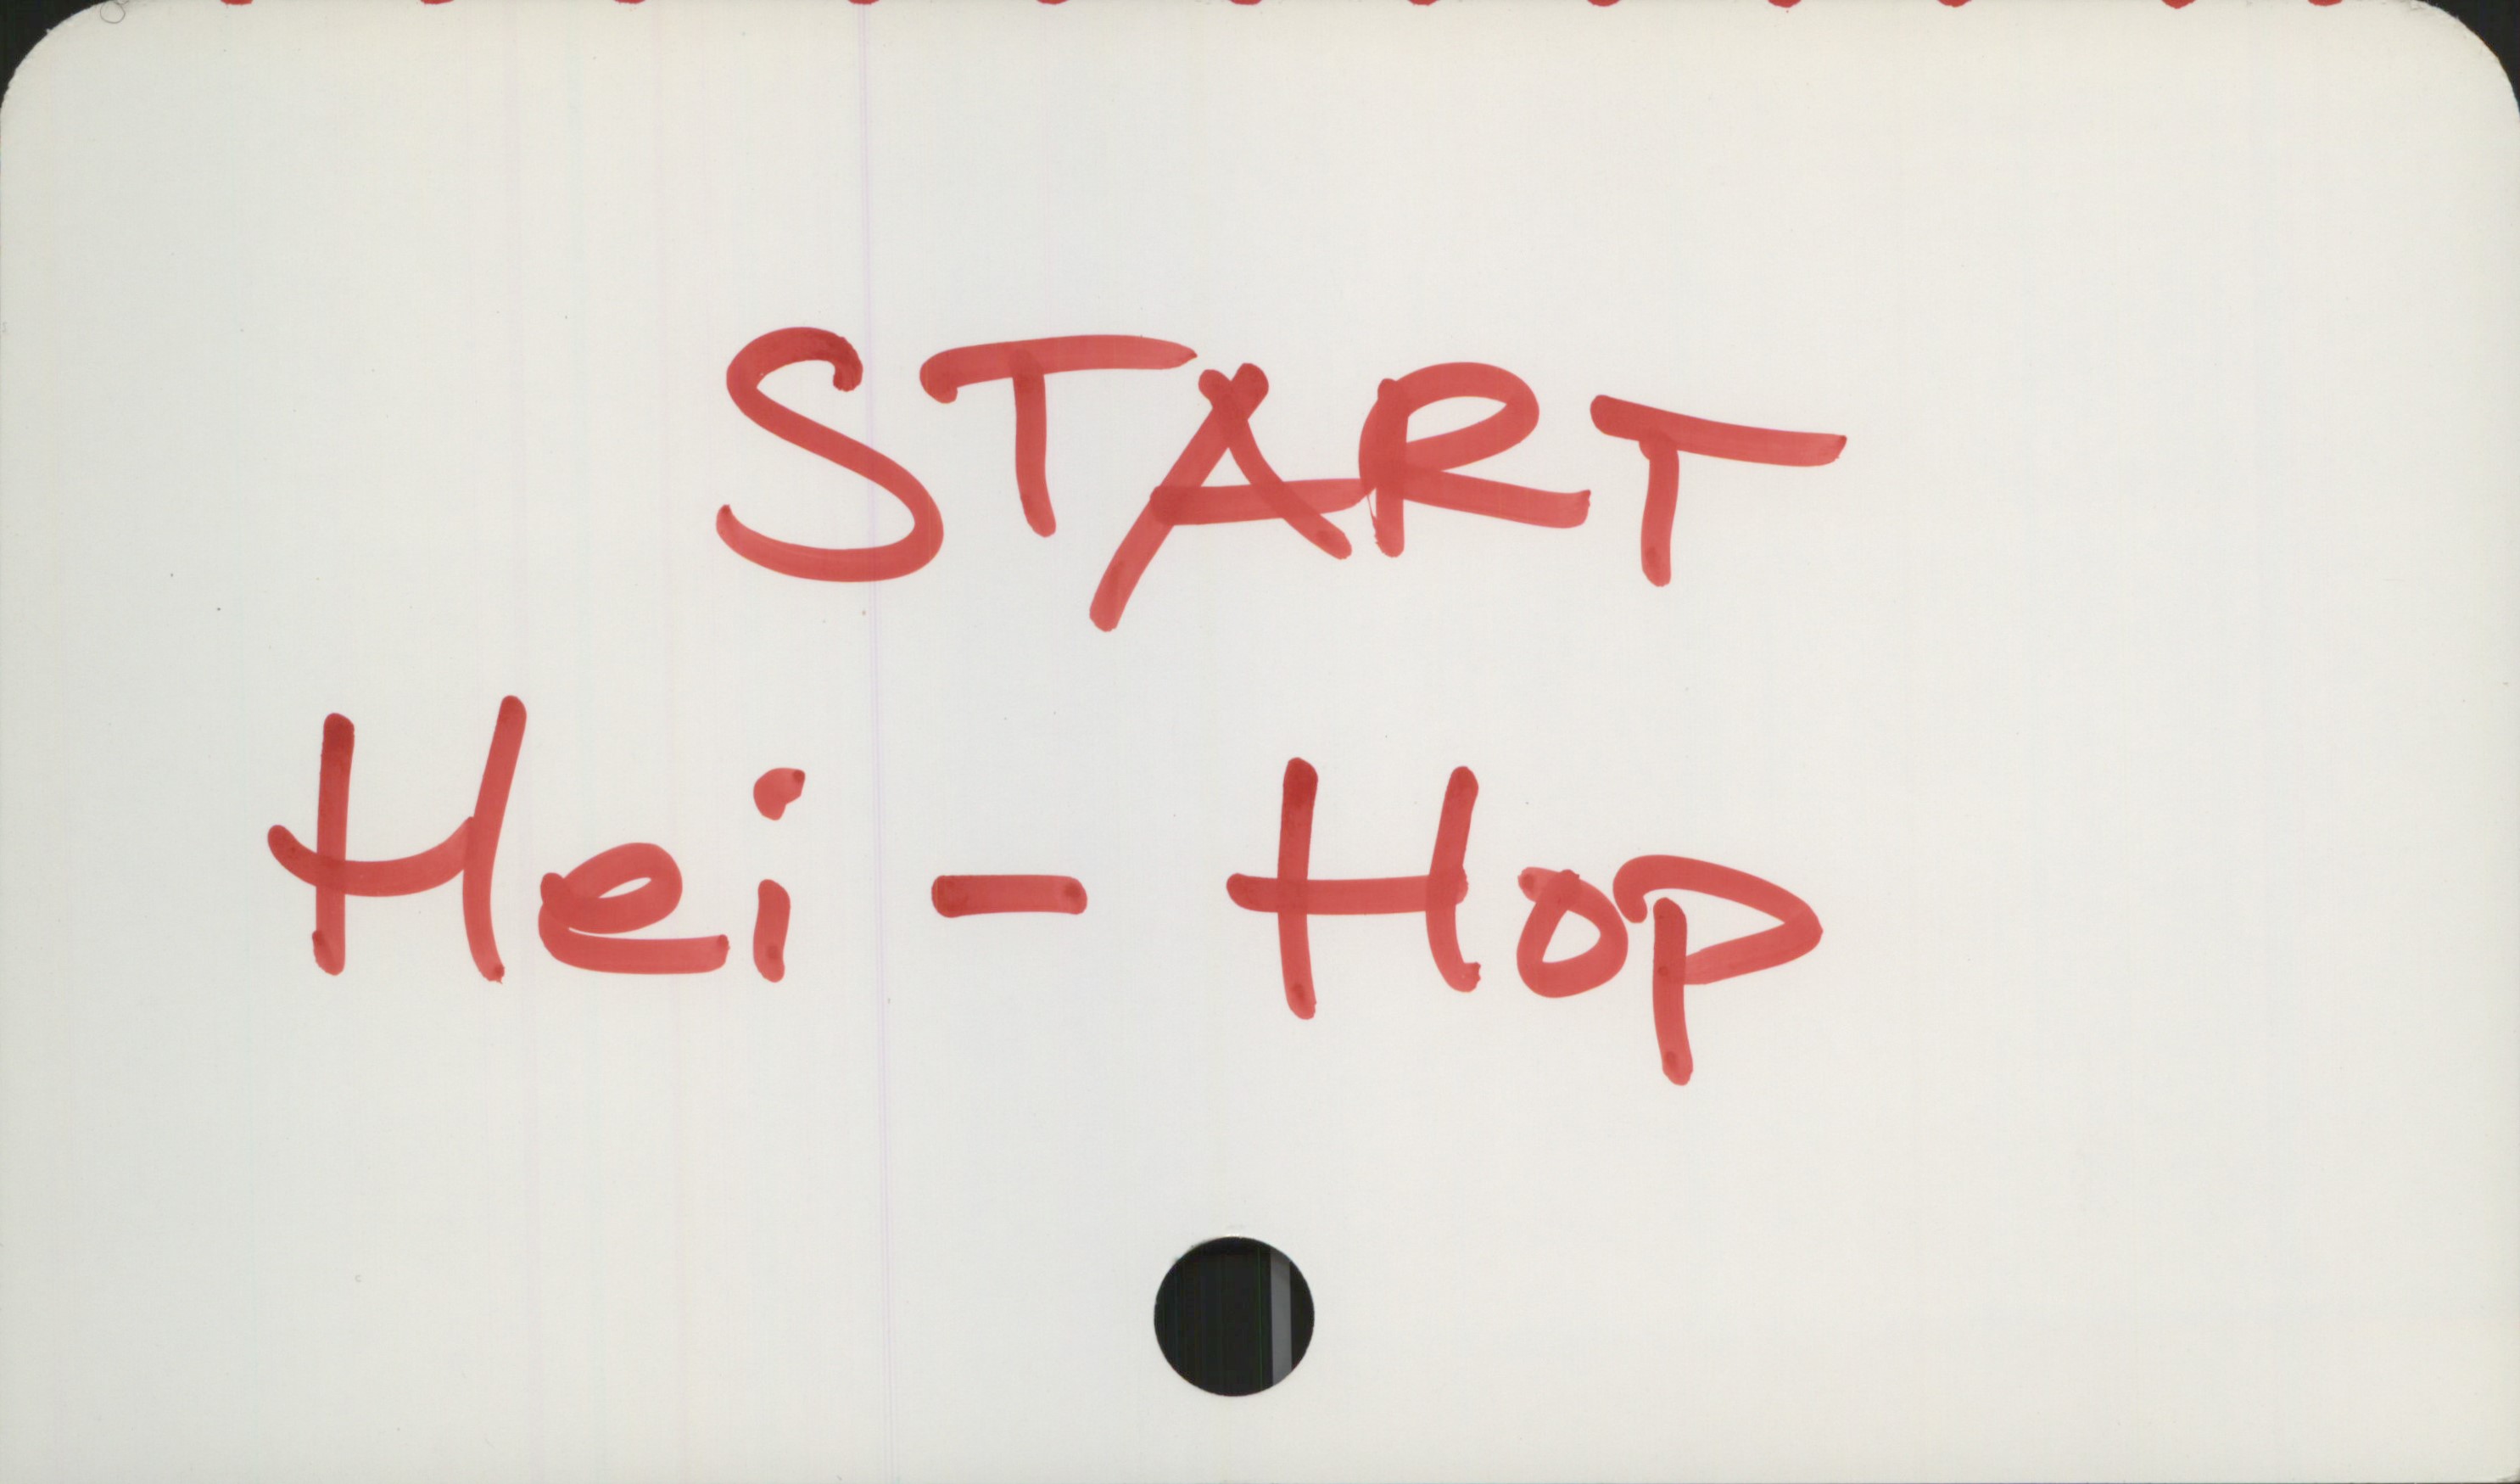  START—
H e.? - H UP

